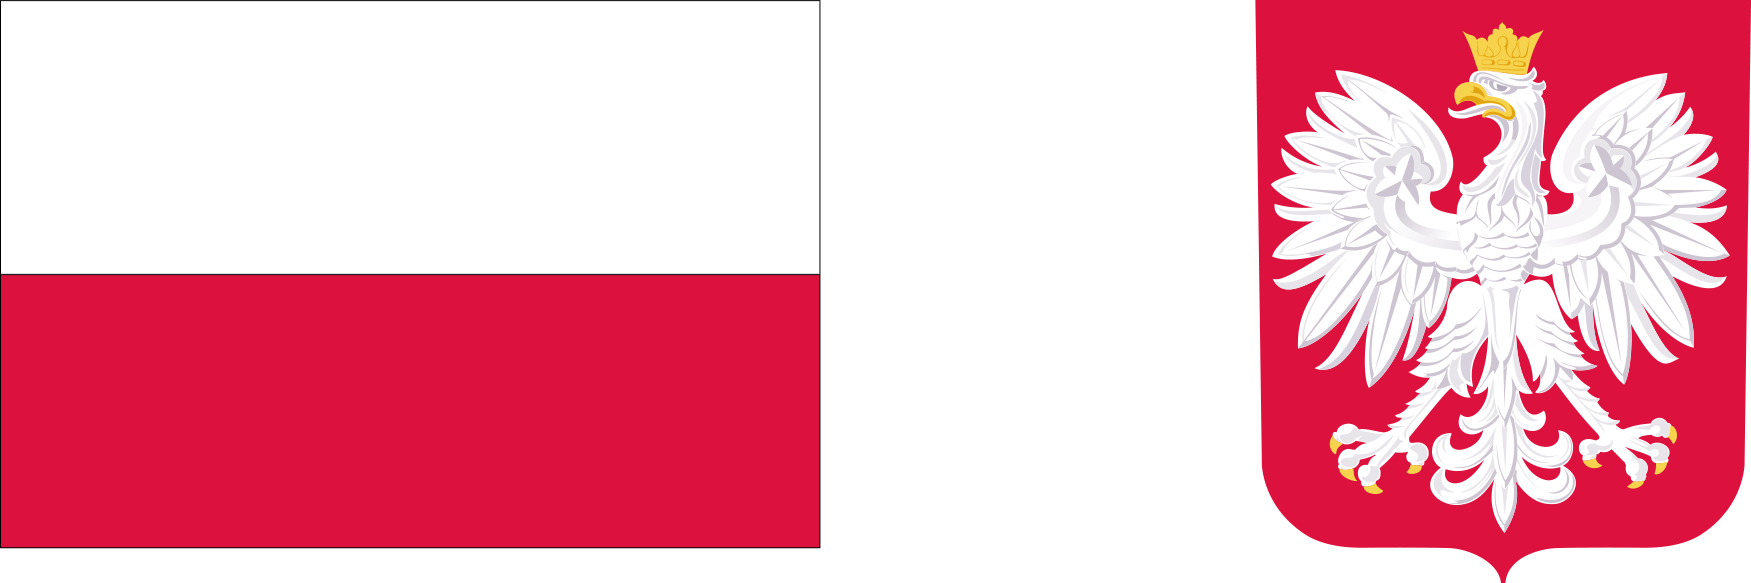 godøo i flaga polski